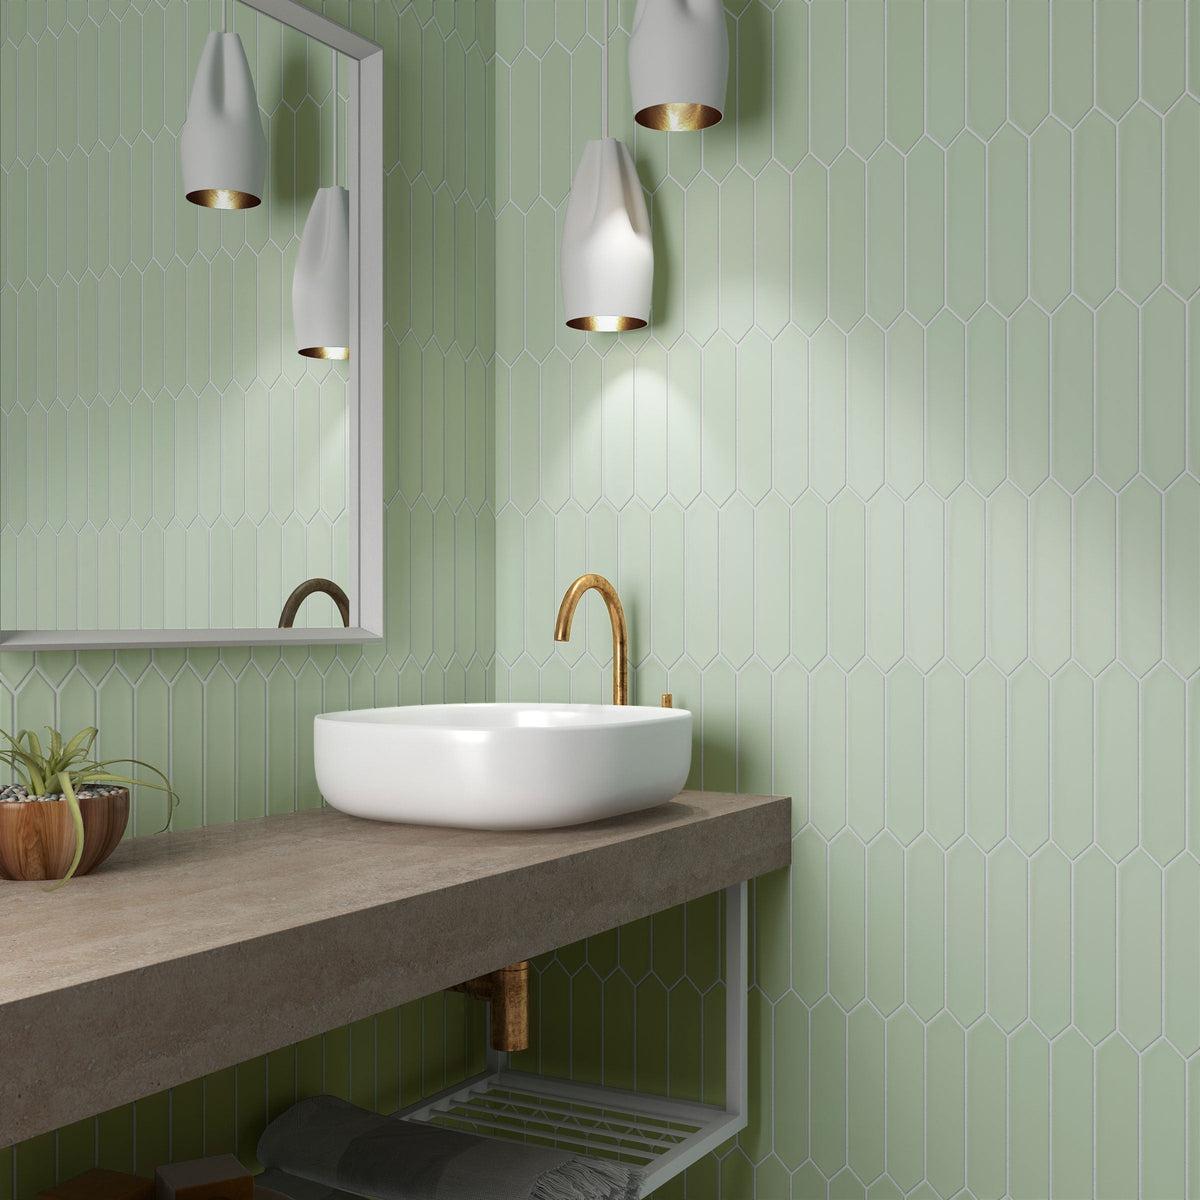 Mint green ceramic picket tile bathroom wall